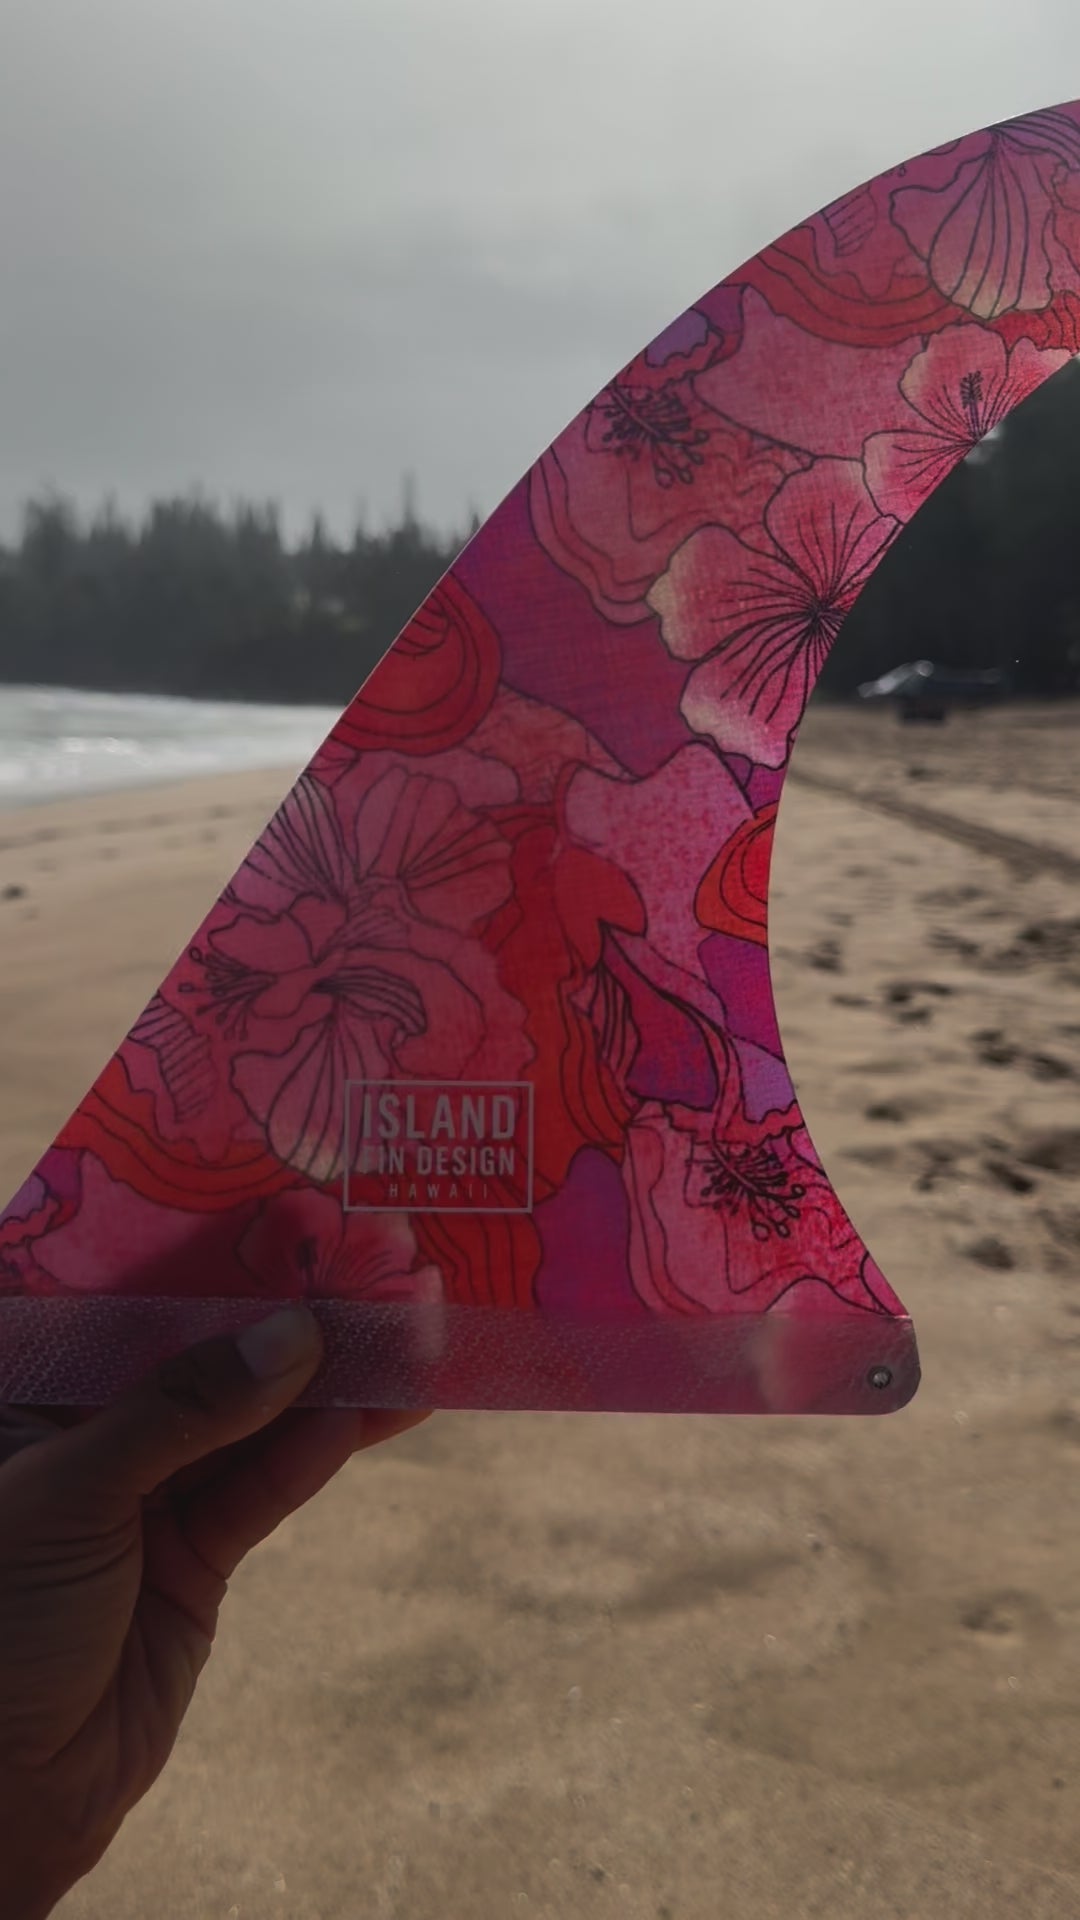 Island Fin Design - Iwa Fin - Hot Pink Hibiscus